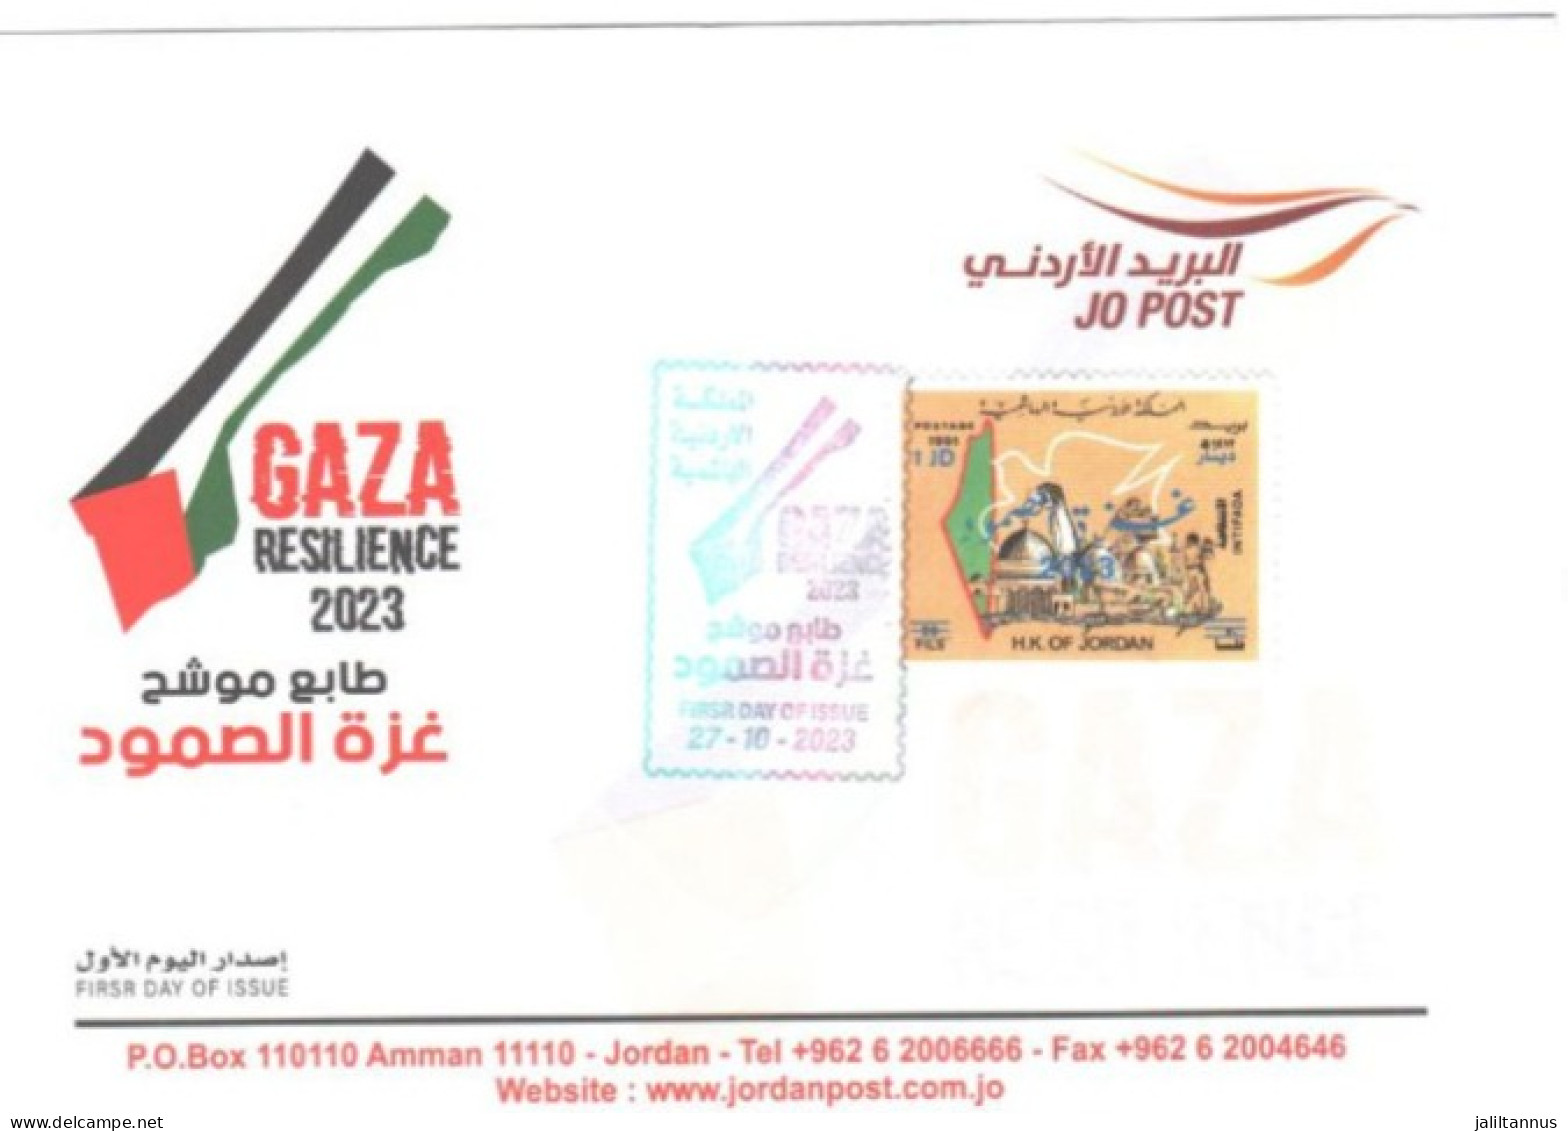 FDC Envelope Gaza Resilience 2023 - Jordania